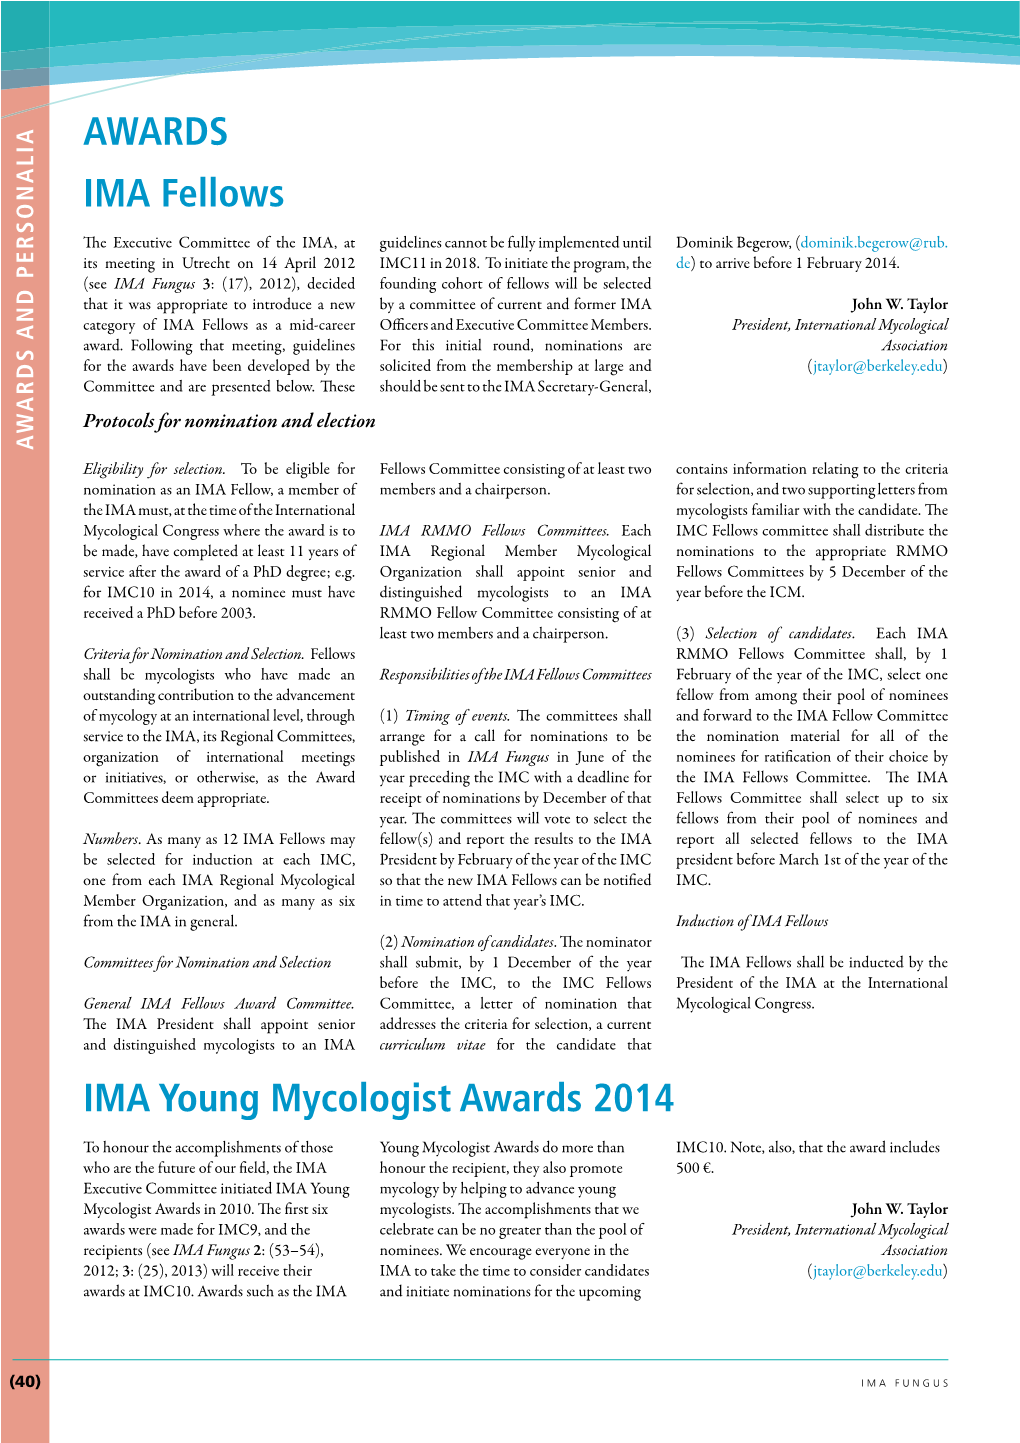 AWARDS IMA Fellows IMA Young Mycologist Awards 2014